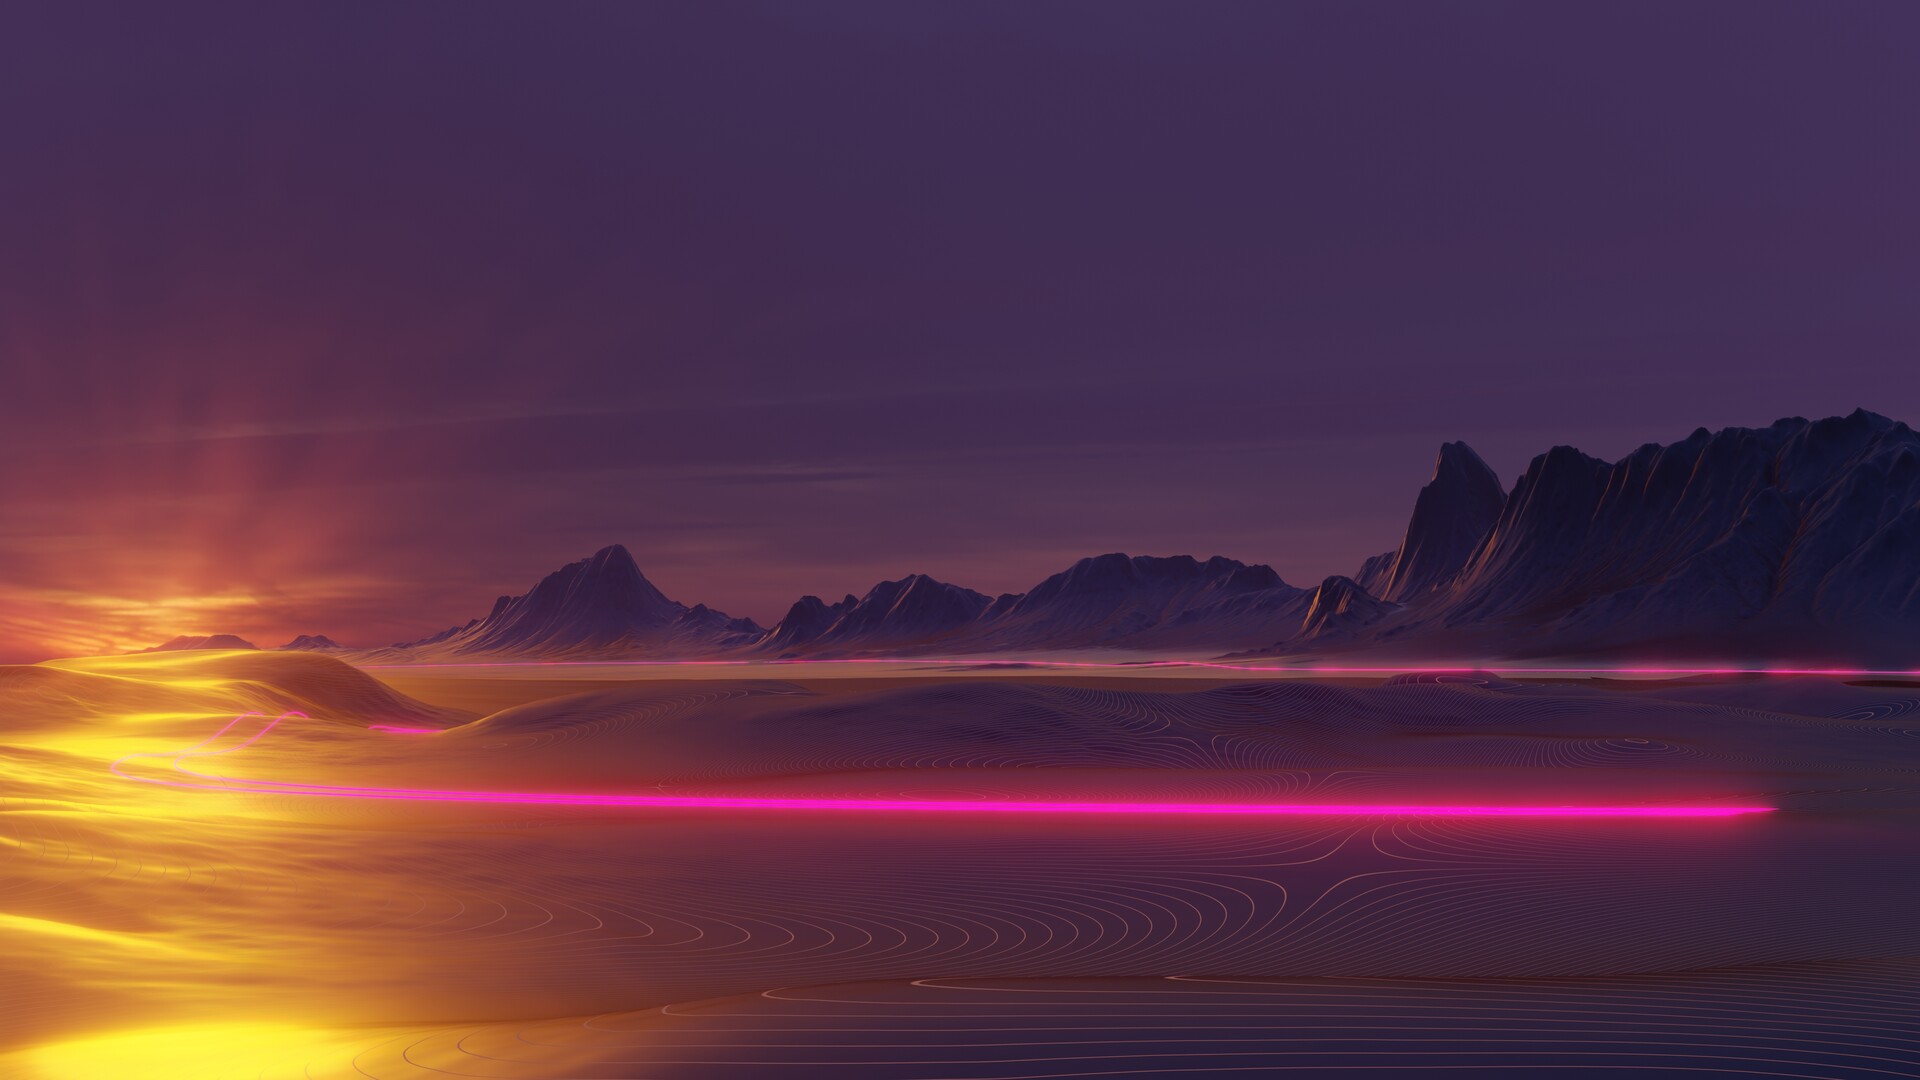 General 1920x1080 artwork retrowave vaporwave neon sunset mountains sand desert landscape digital art CGI science fiction OutRun synthwave cyberpunk